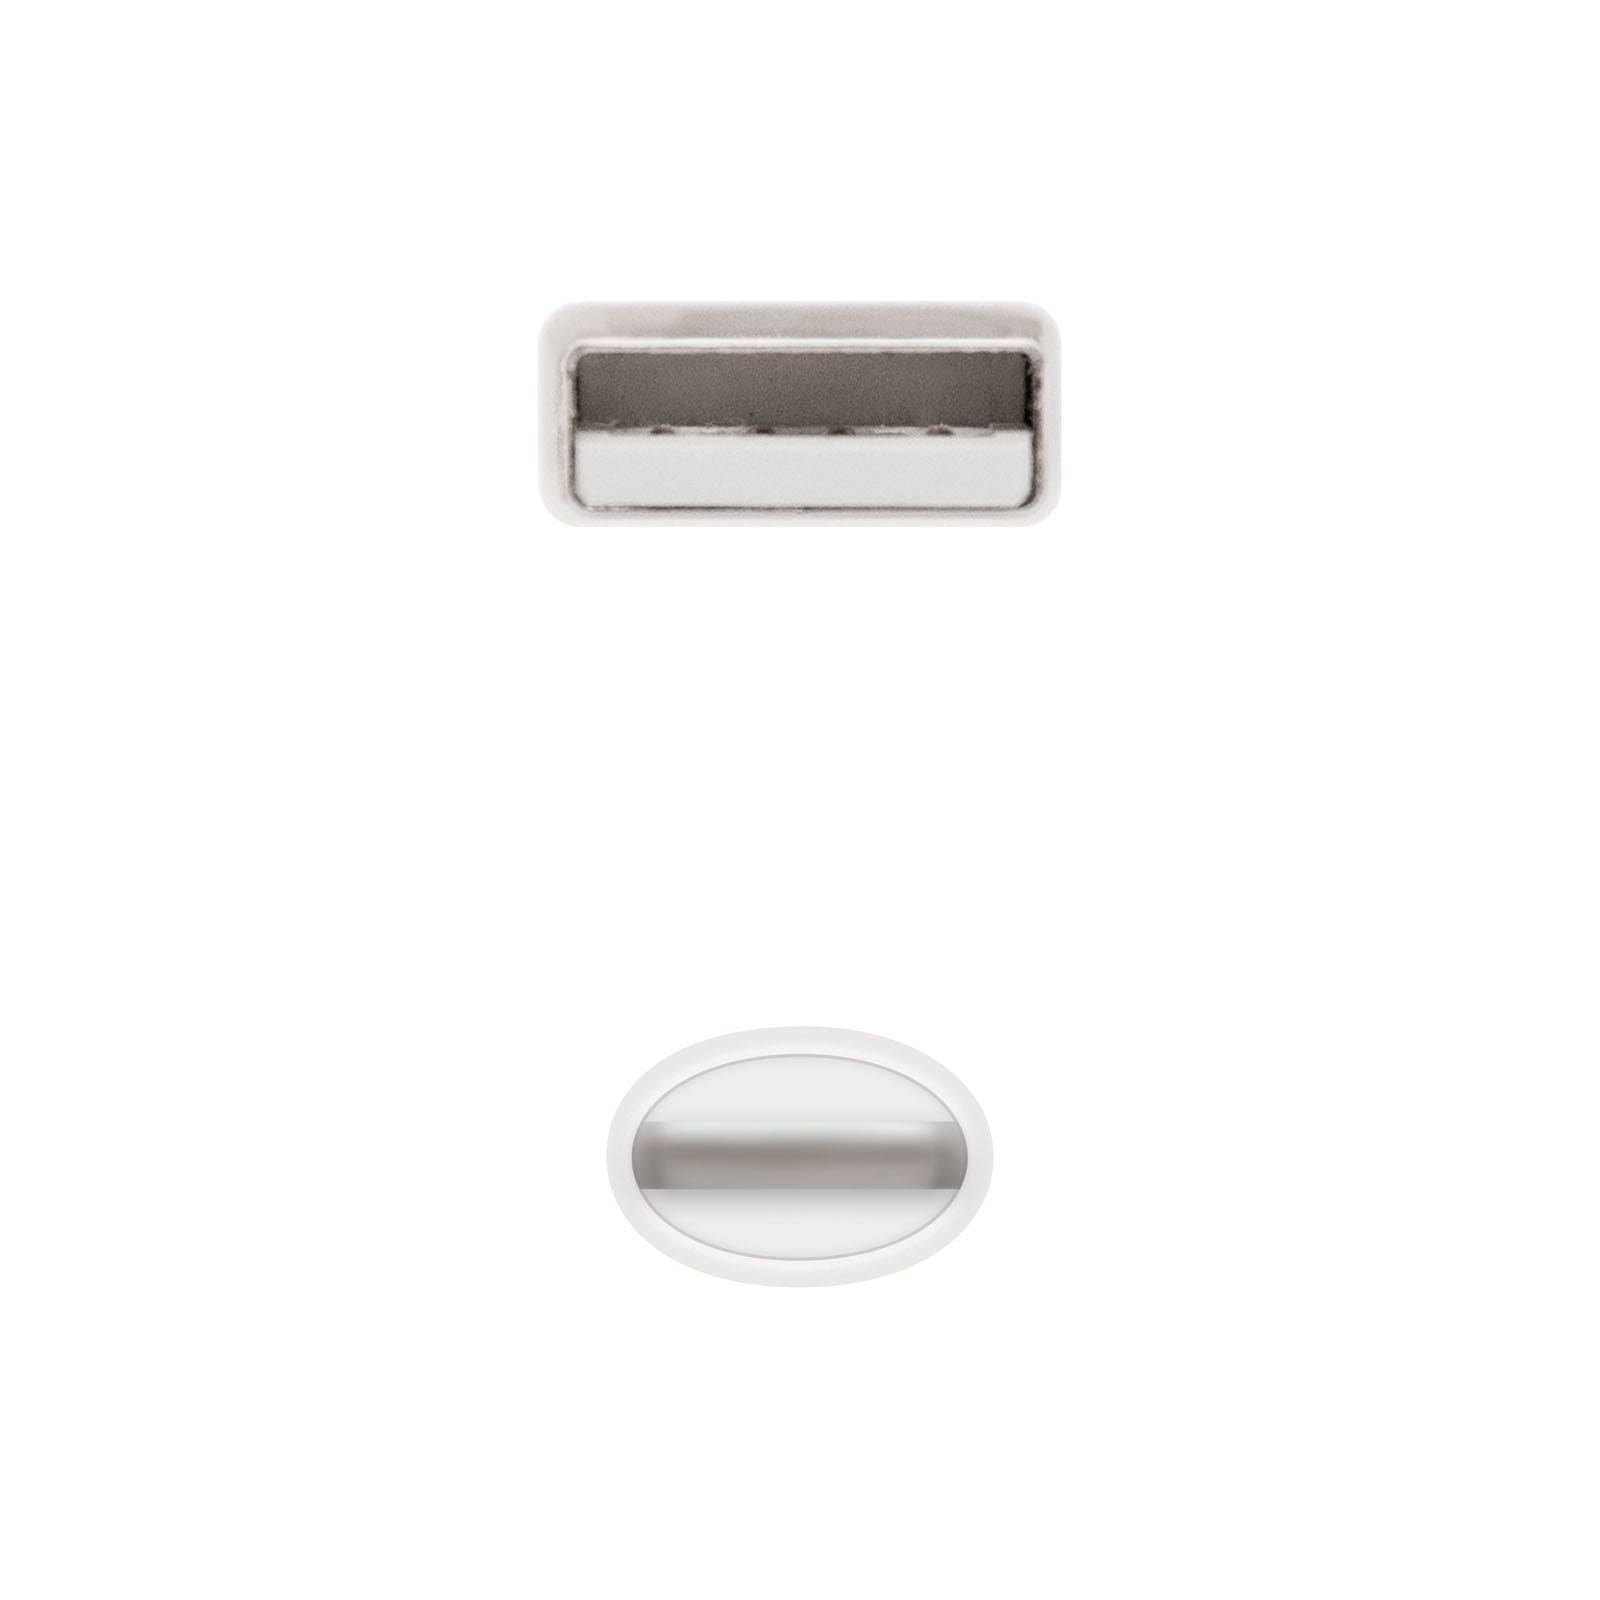 Câble USB-A 2.0 Mâle vers Lightning Mâle 2m - Couleur Blanc